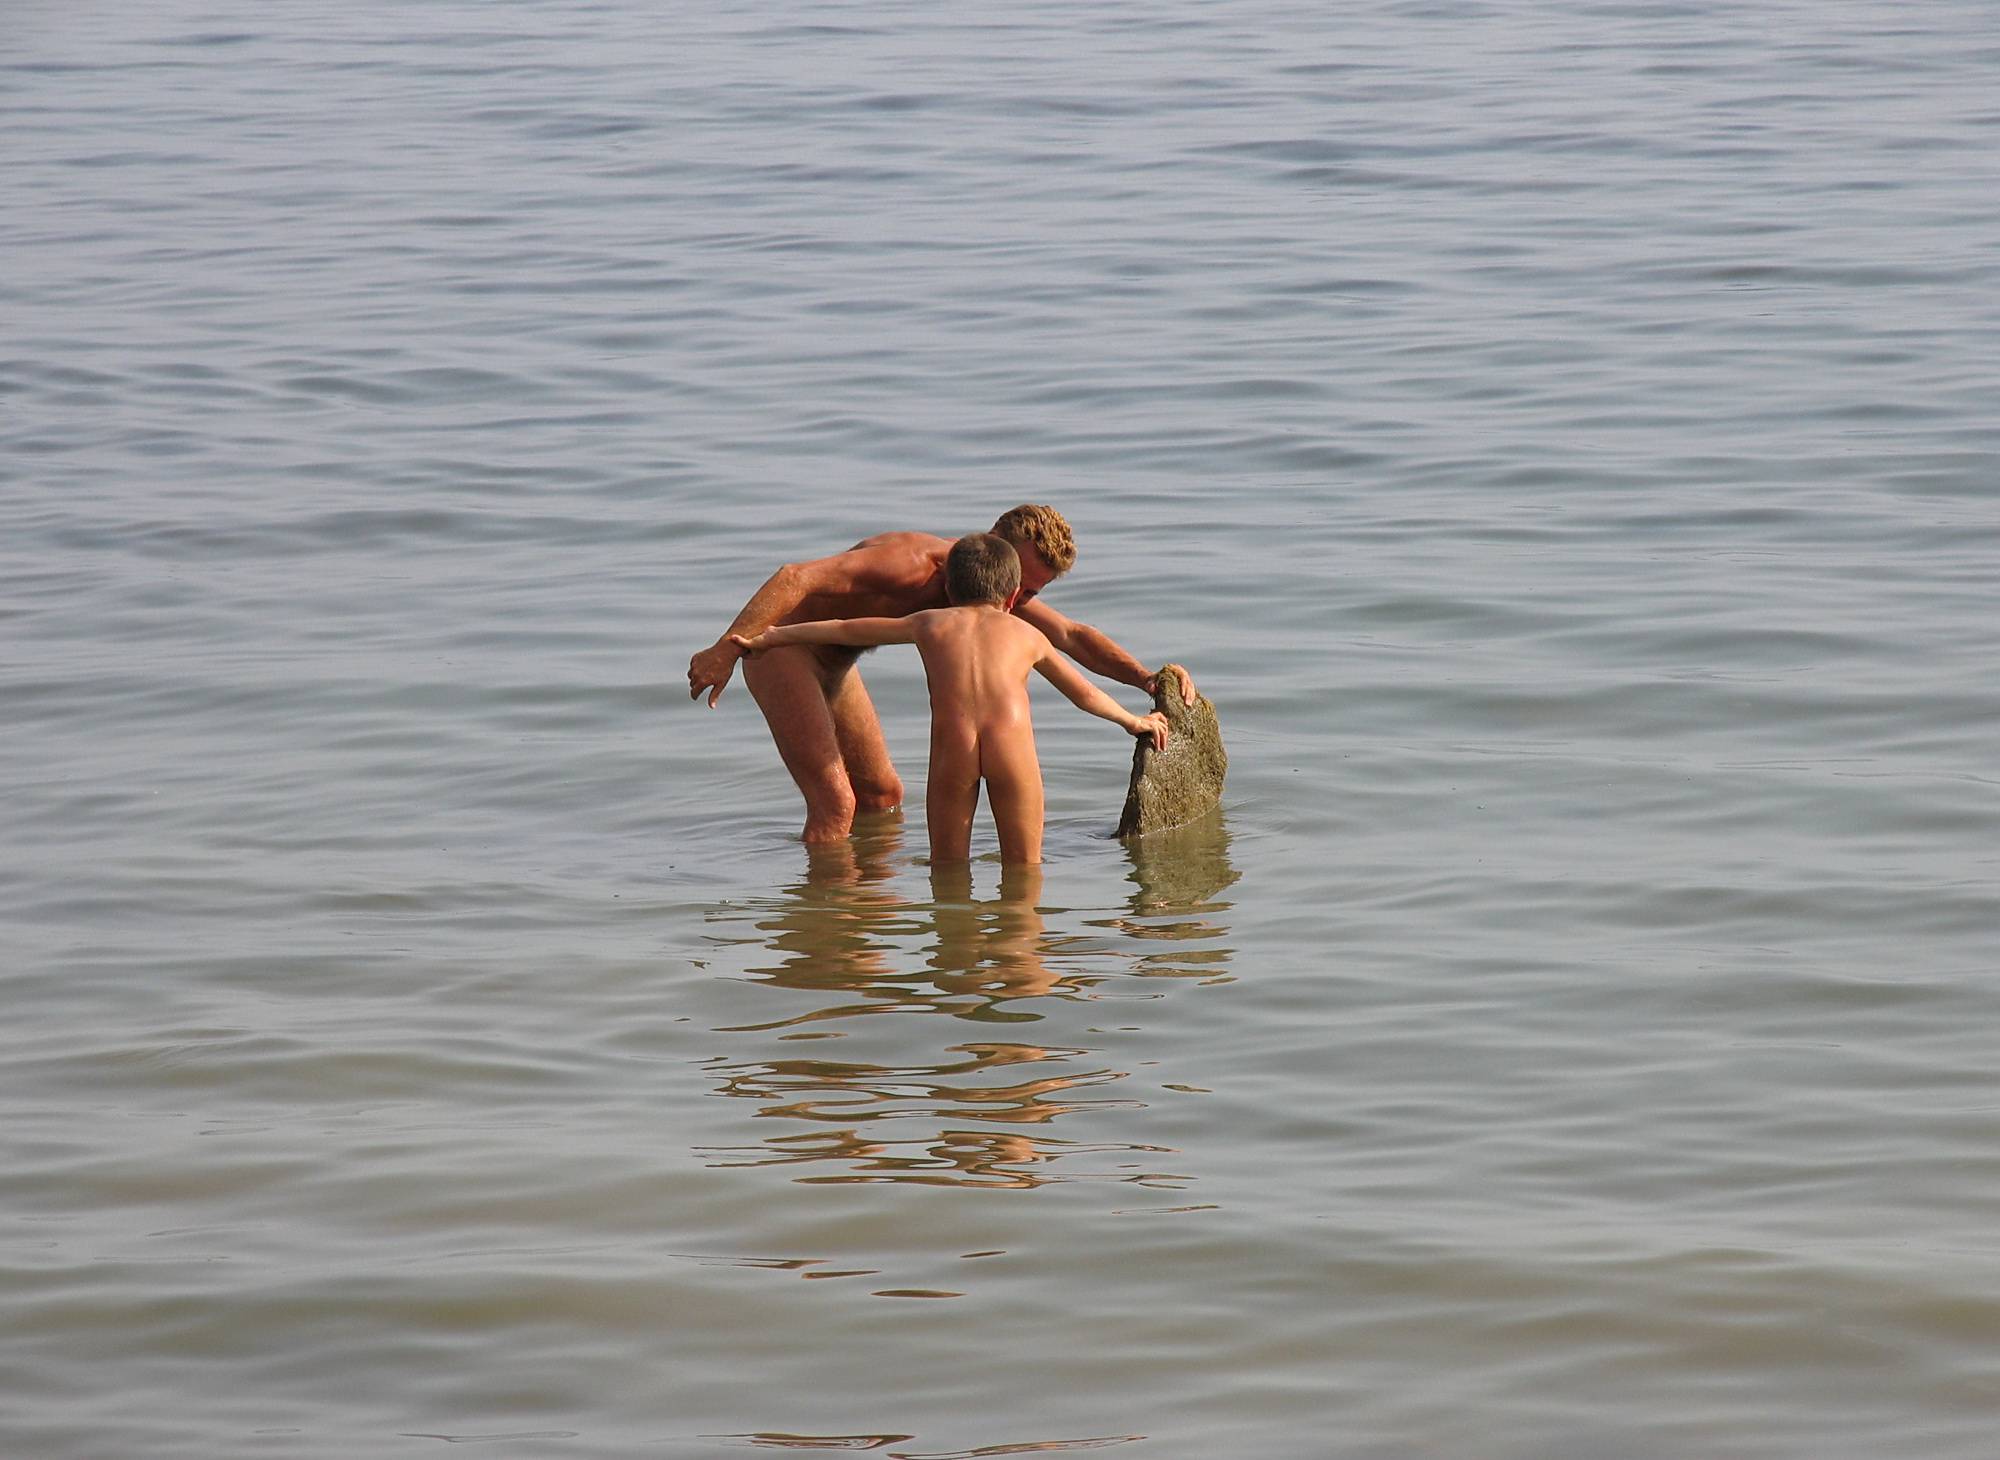 Black Sea Magical Bottle Nudist Photos - 2